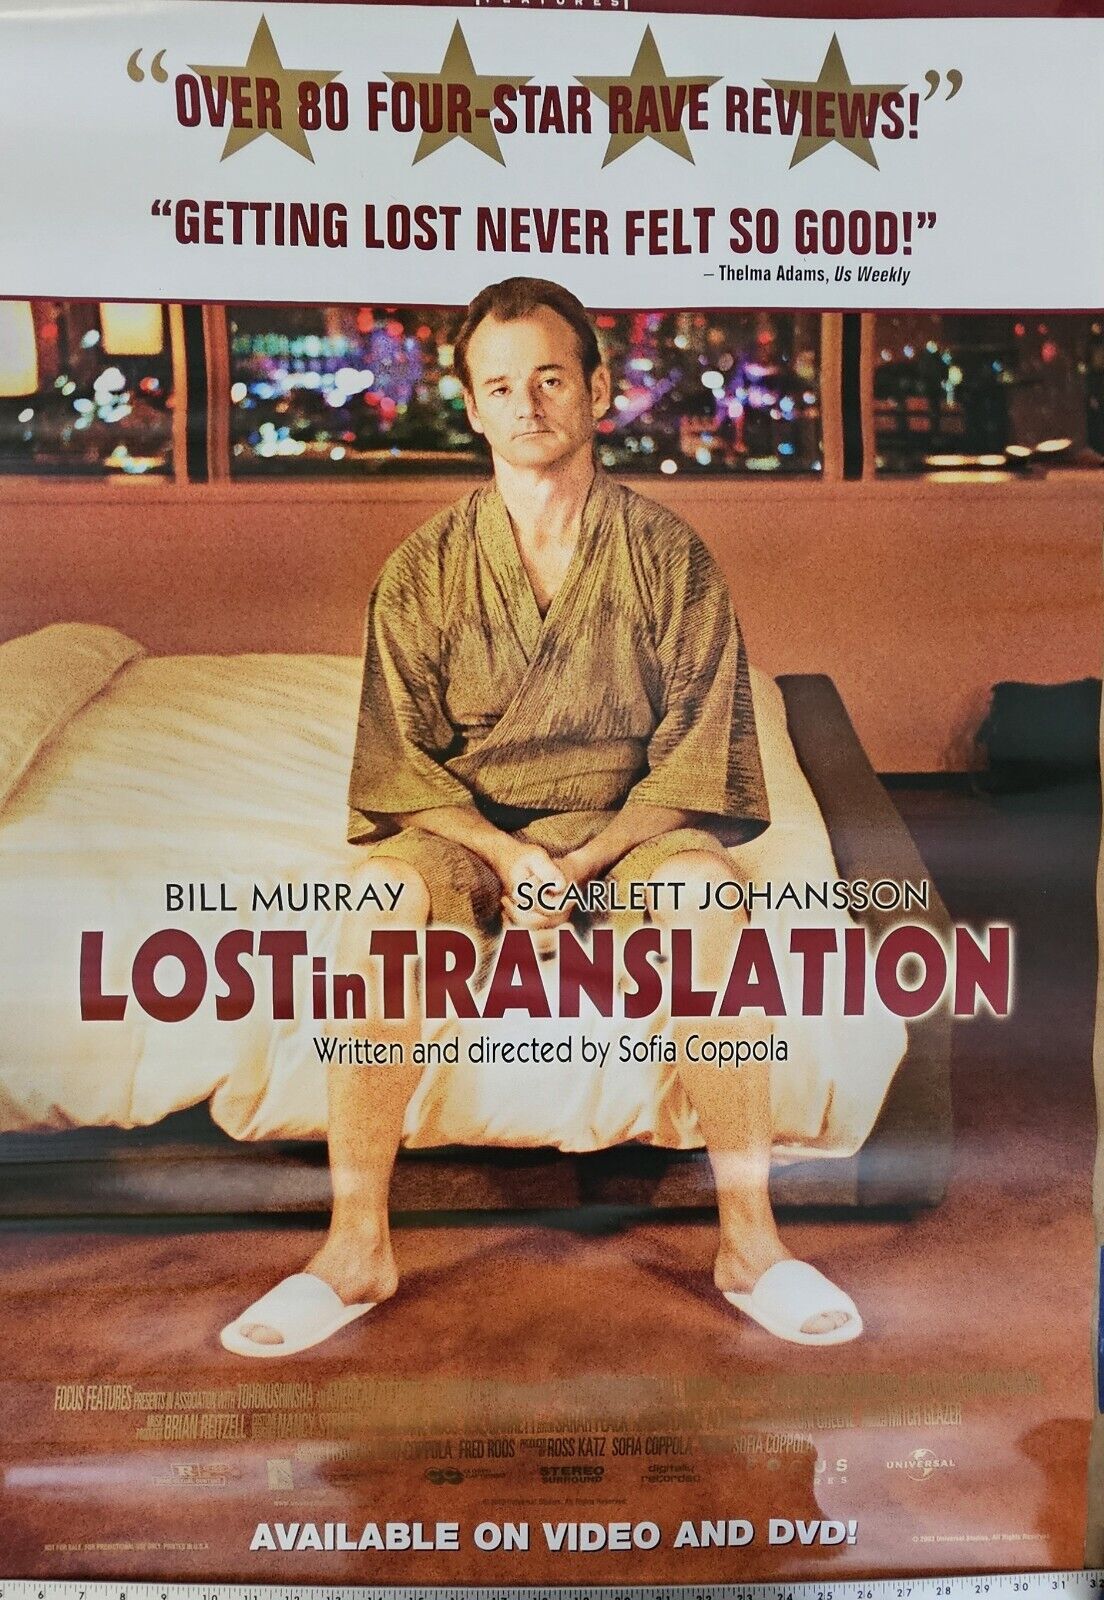 Bill Murray and Scarlett Johansson in Lost in Translation 27 x 40 DVD  poster